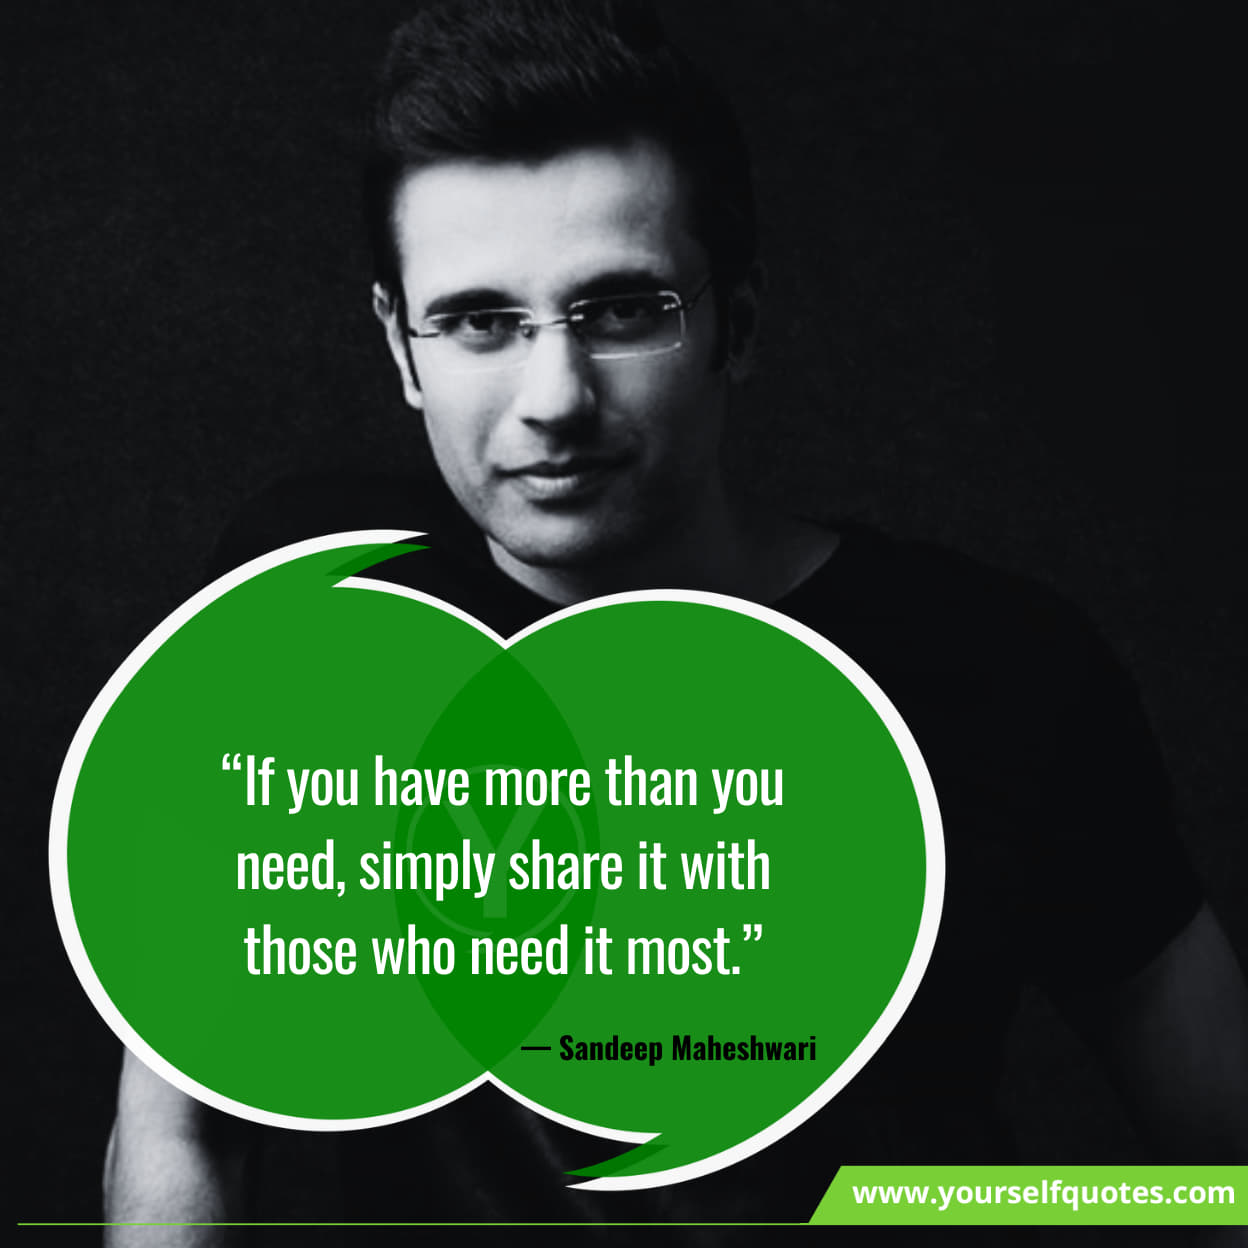 Motivational Quotes From Sandeep Maheshwari